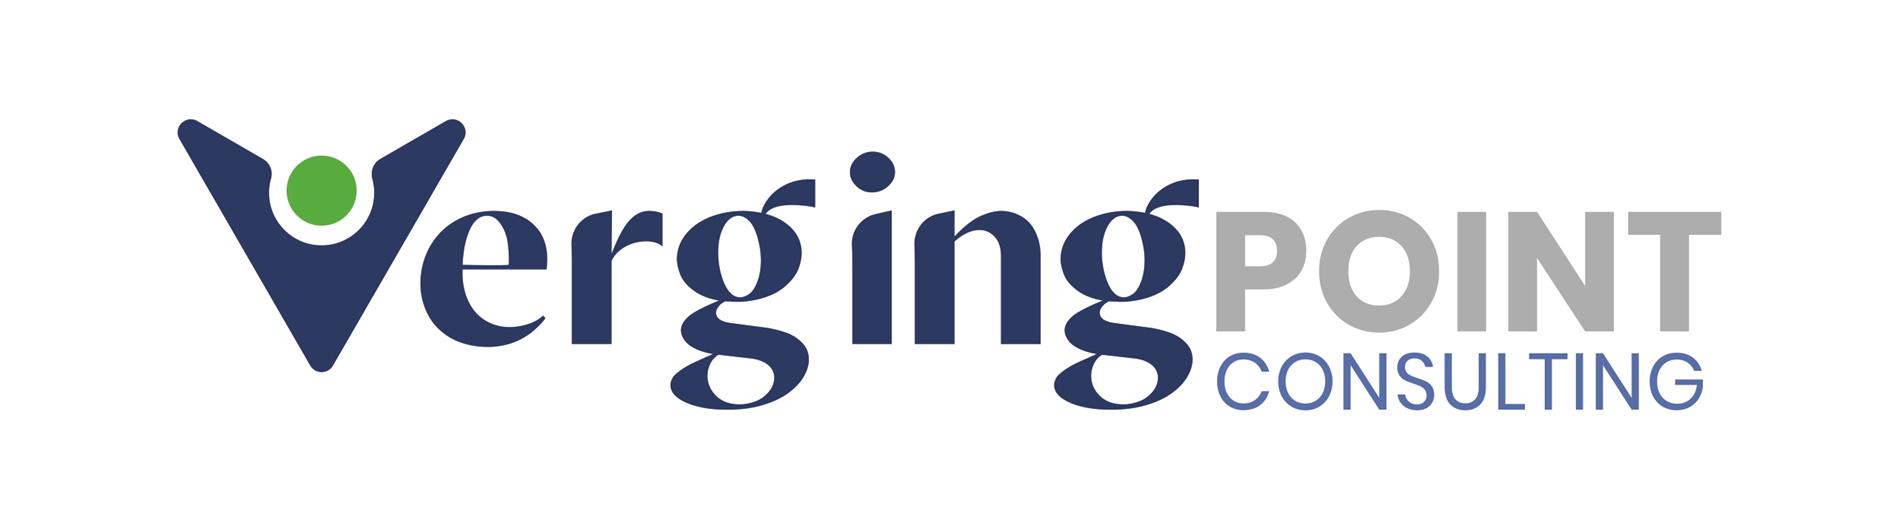 verging point logo 